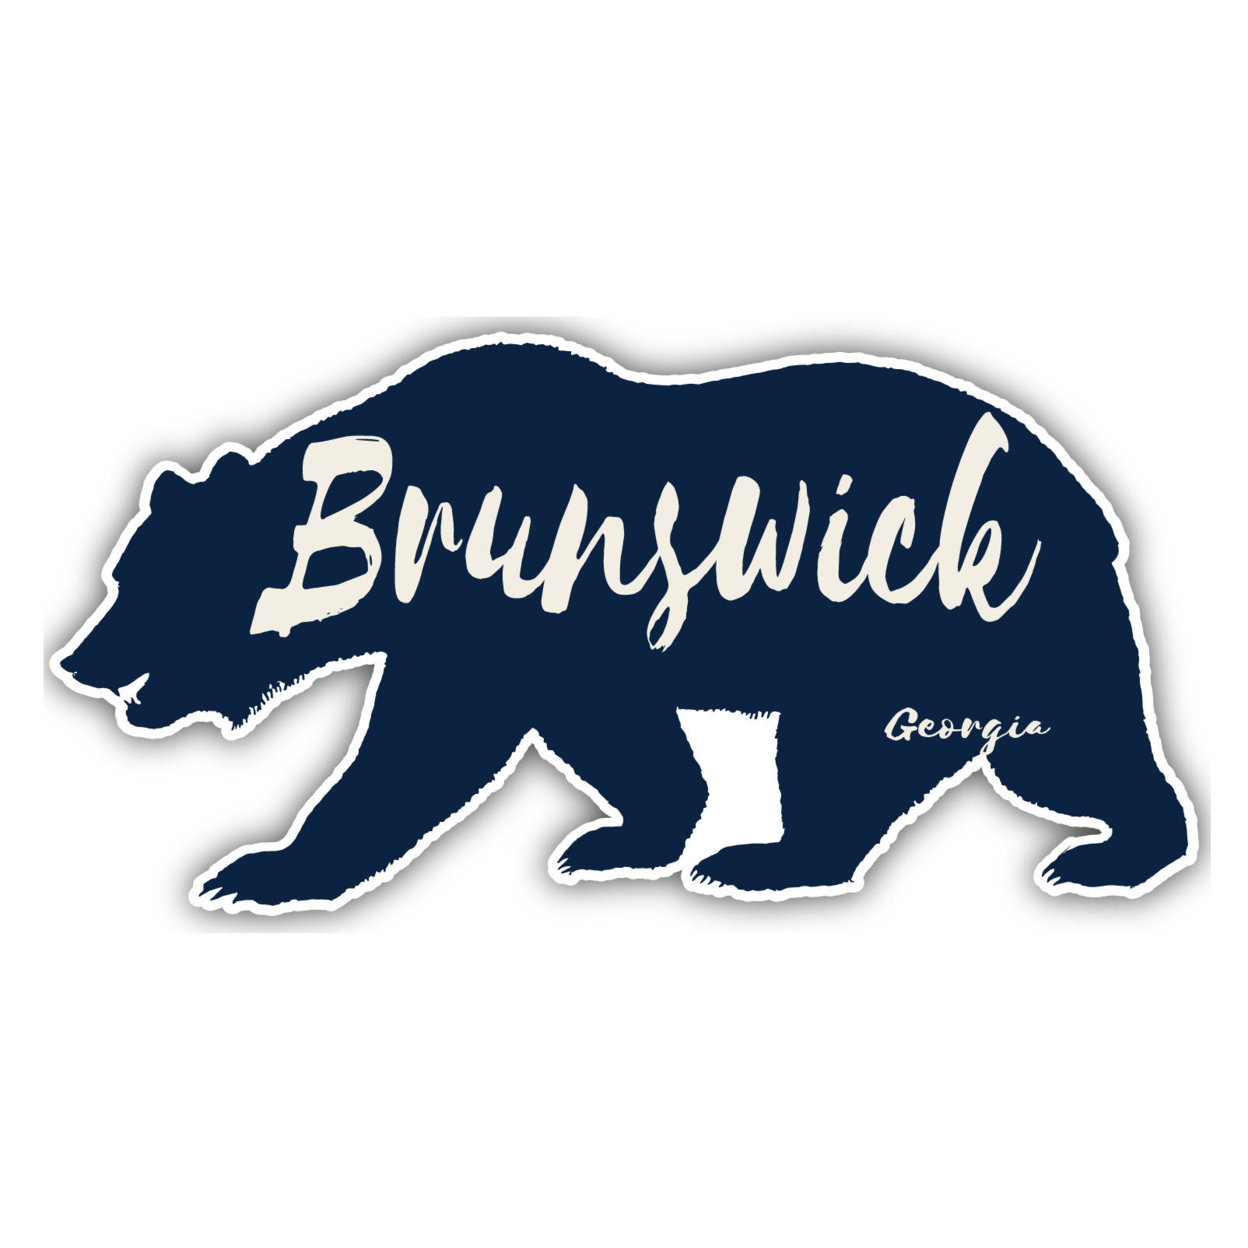 Brunswick Georgia Souvenir Decorative Stickers (Choose Theme And Size) - 4-Pack, 10-Inch, Bear